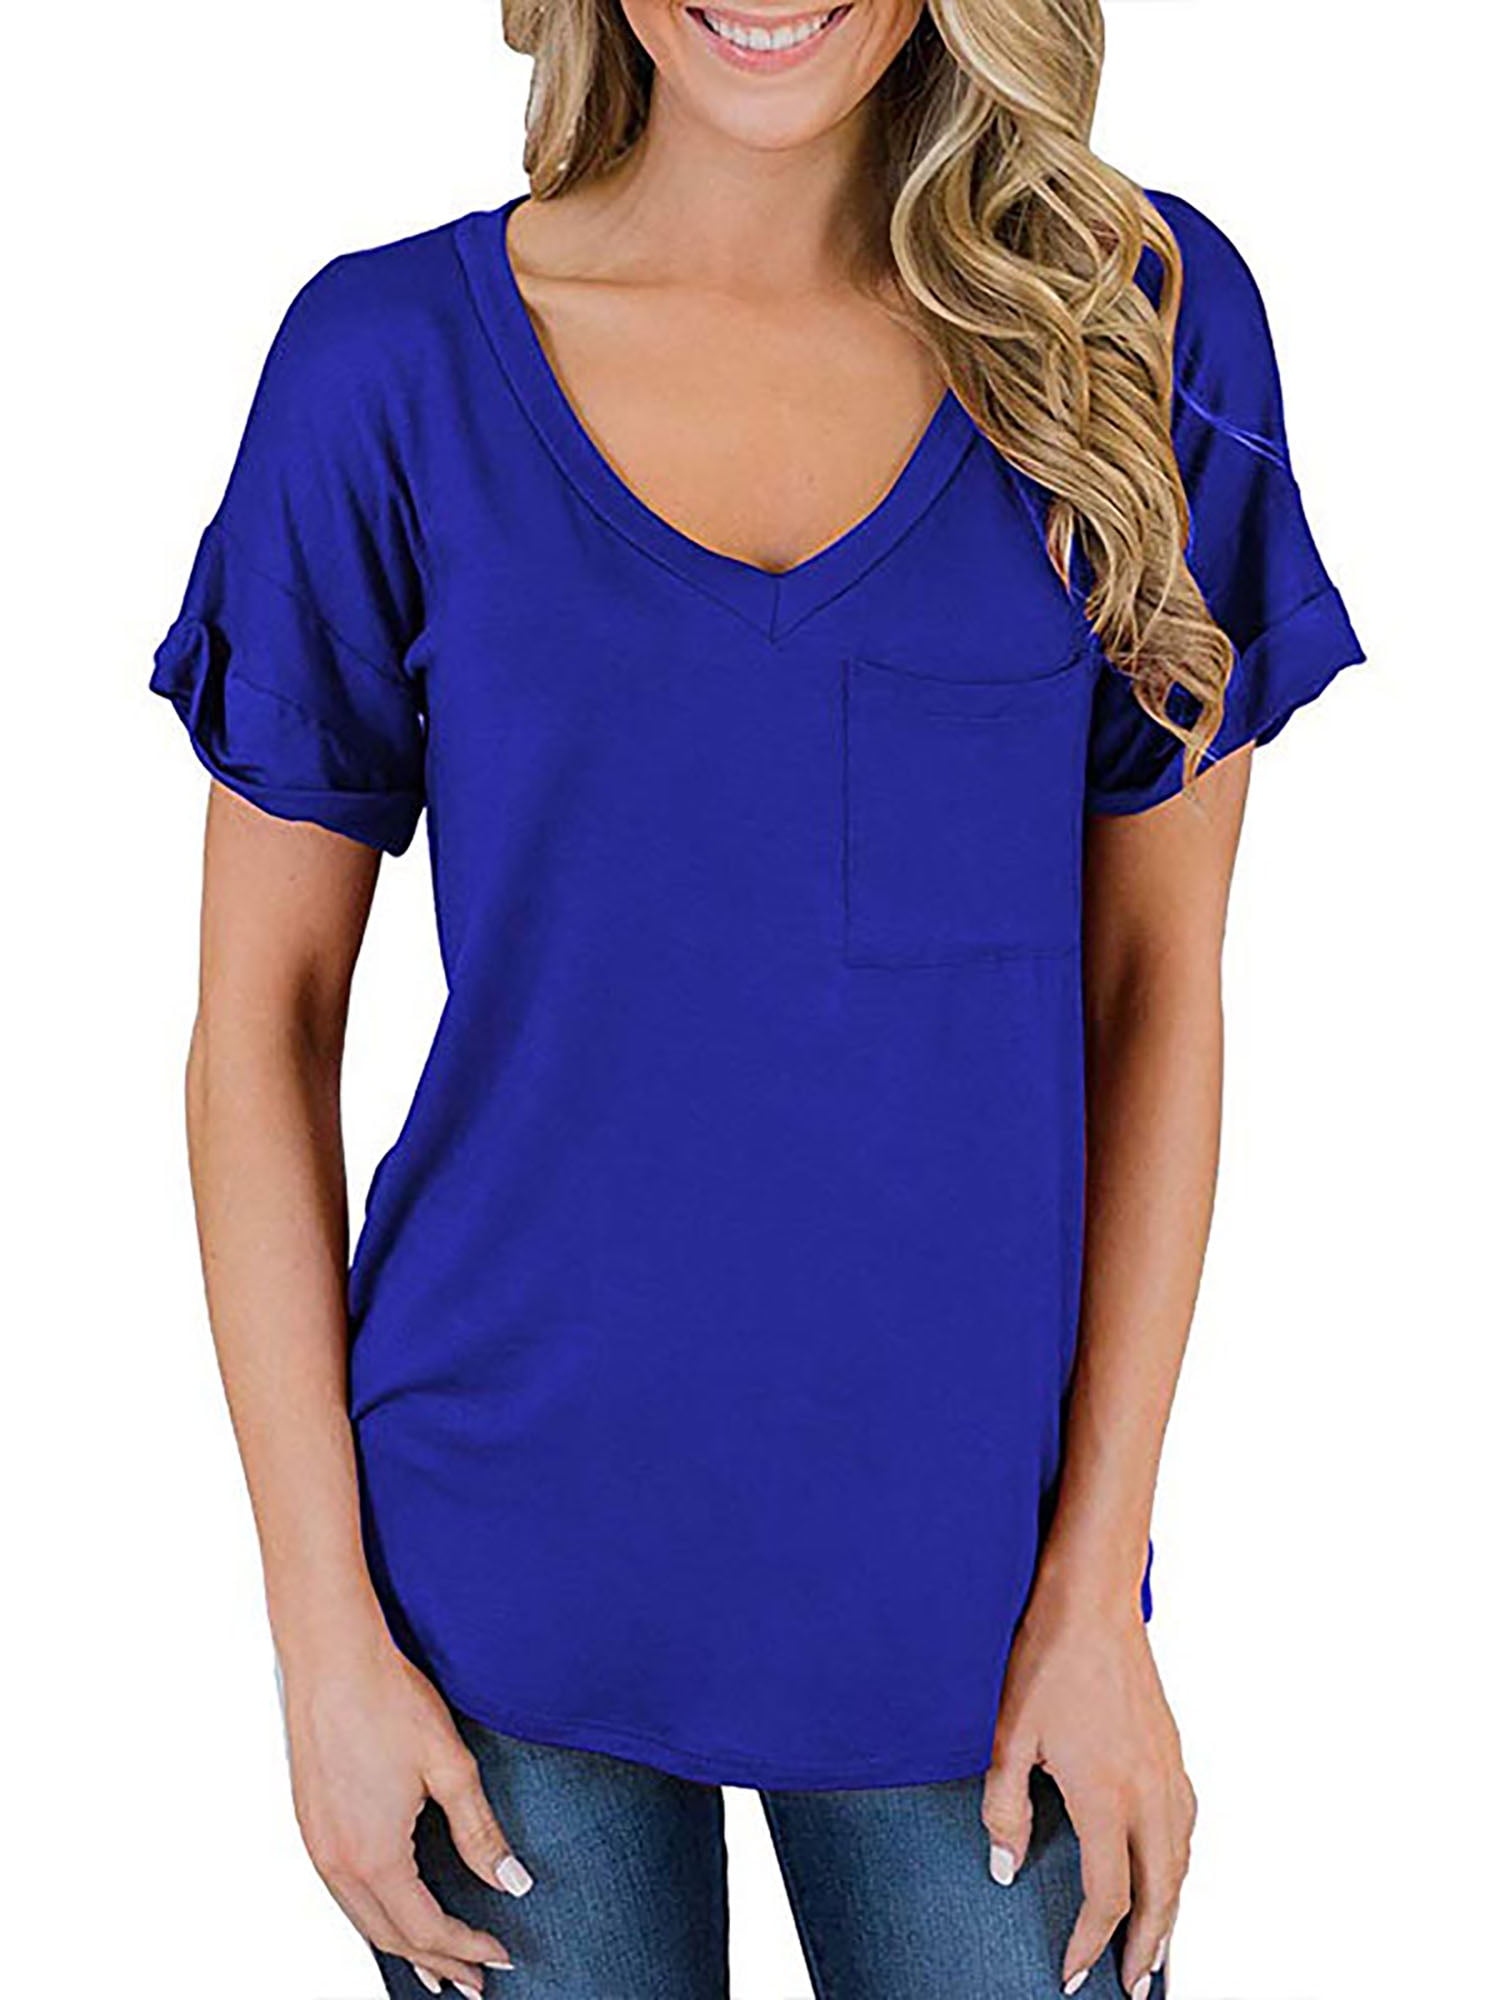 Women Summer Short Sleeve solid Color Shirt Blouse T Shirt Casual Tee Tops